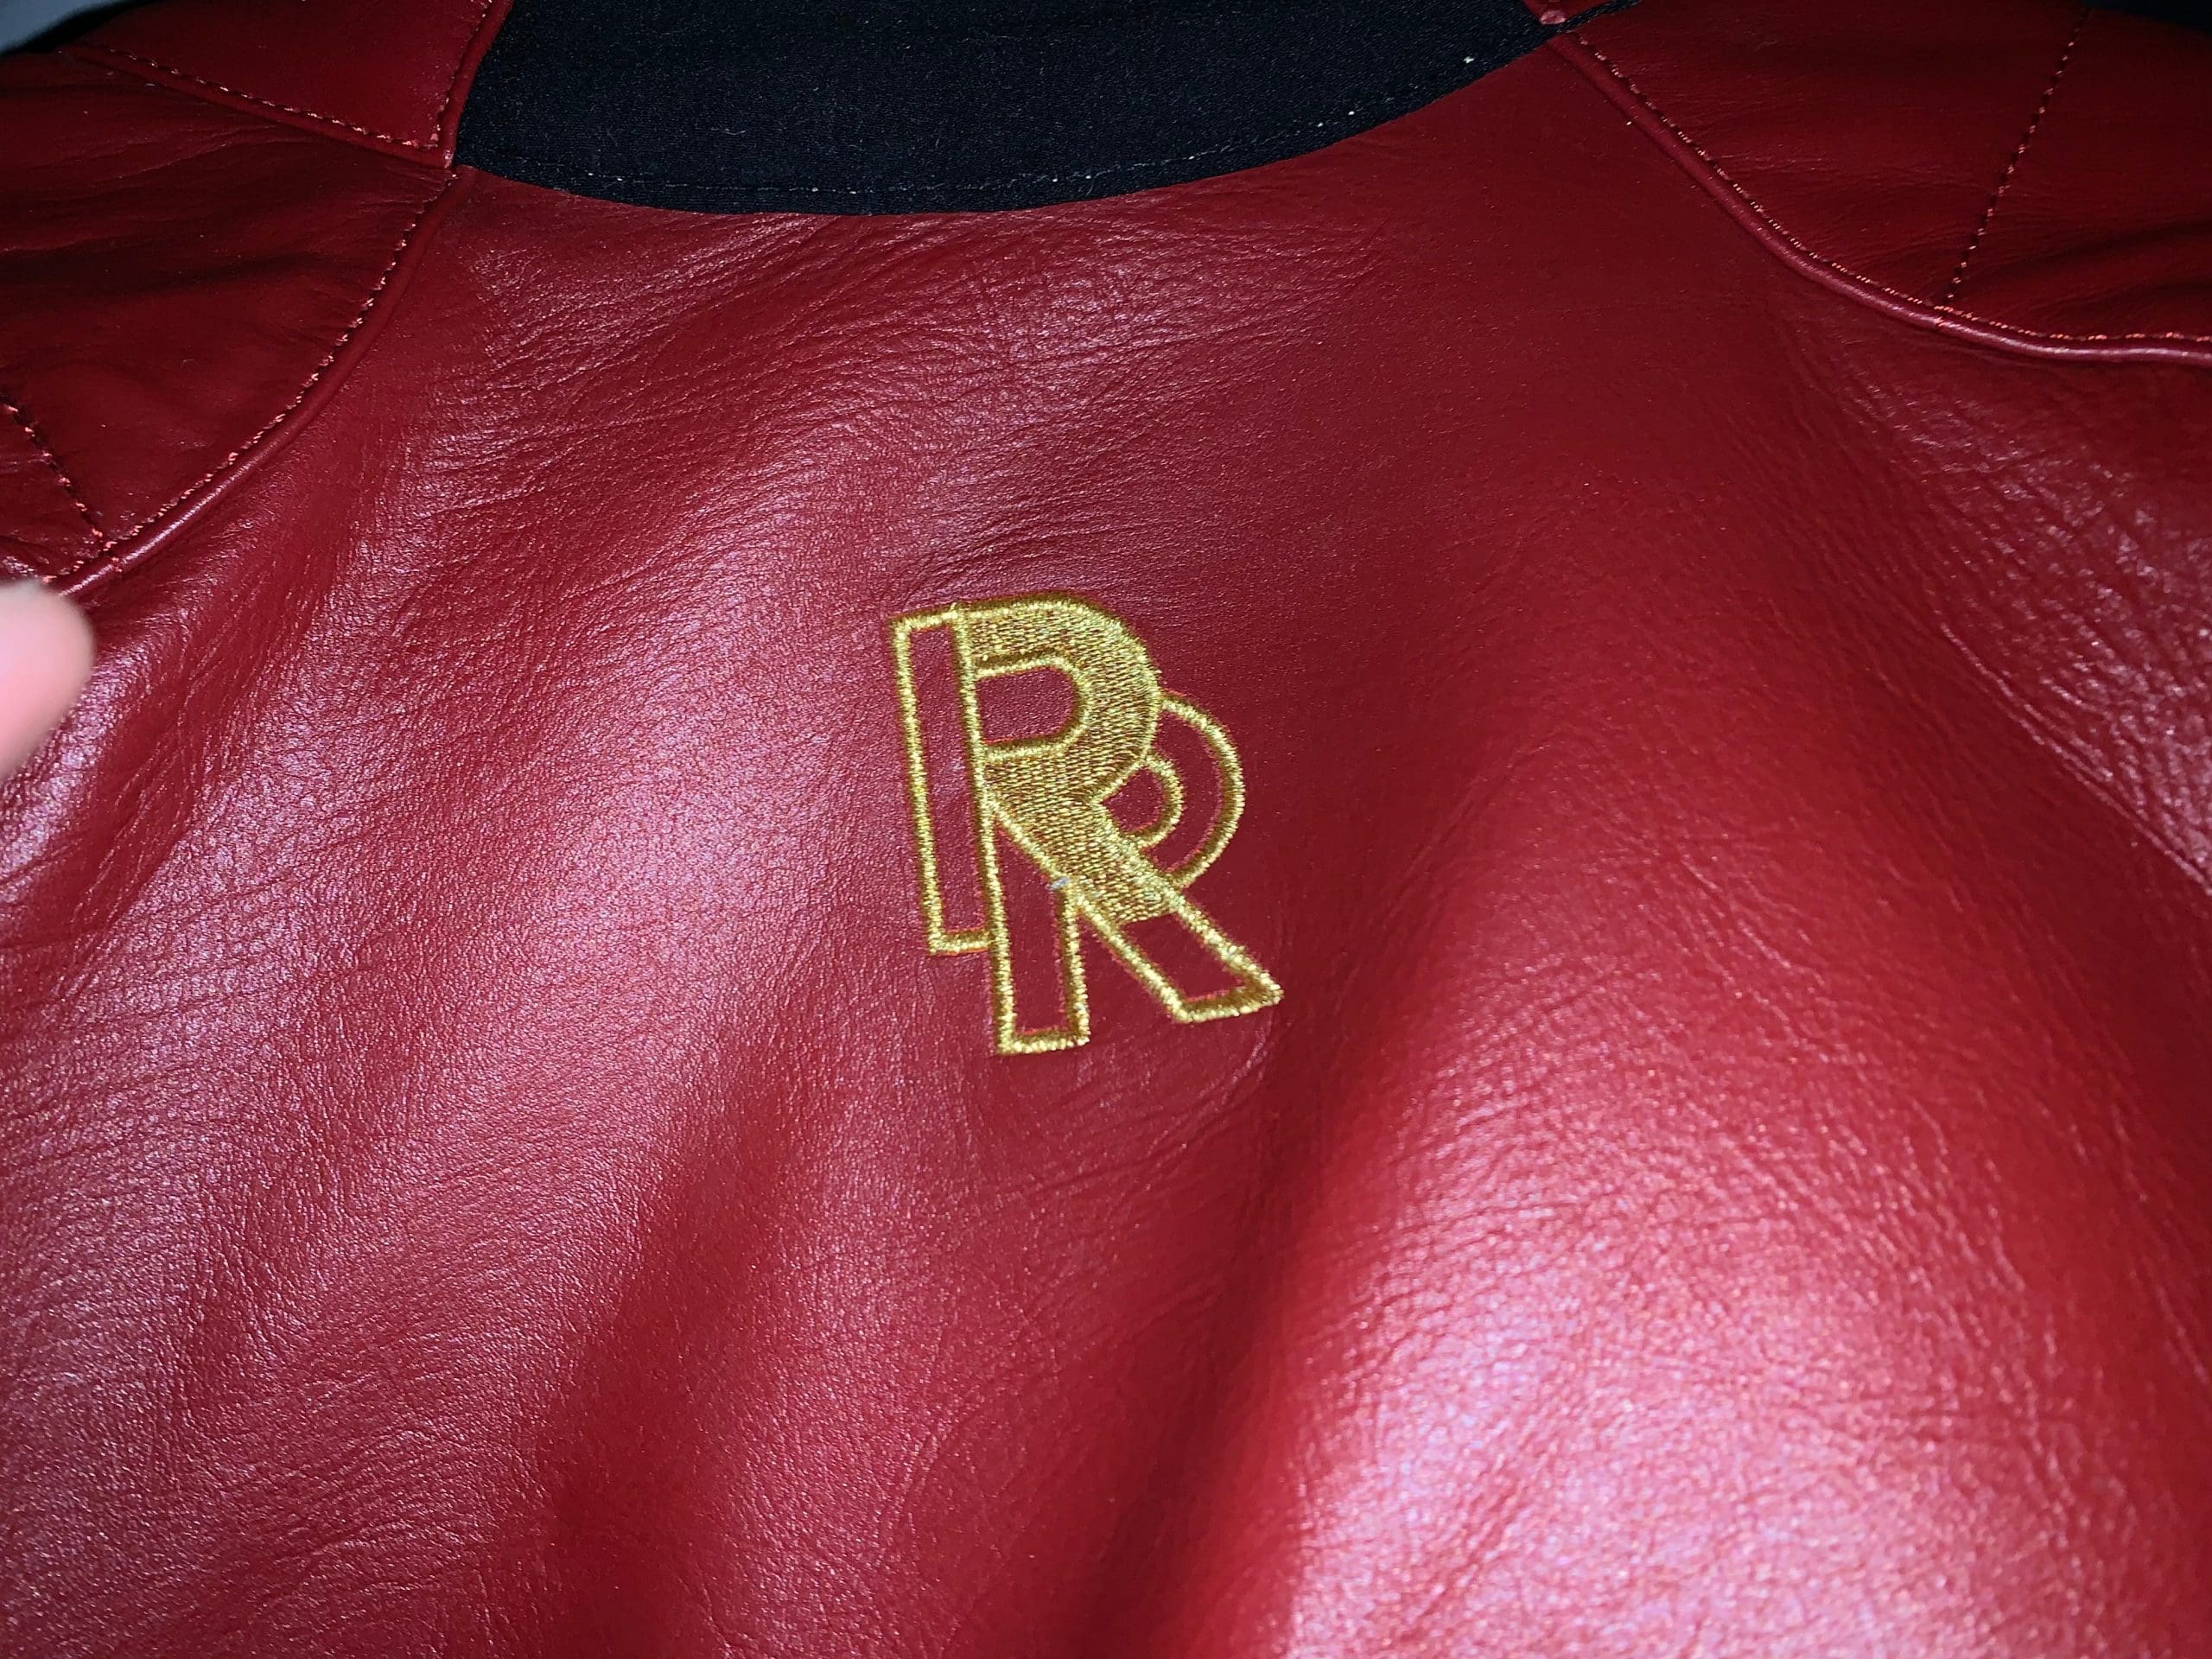 Raven Rova logo on the back of jacket